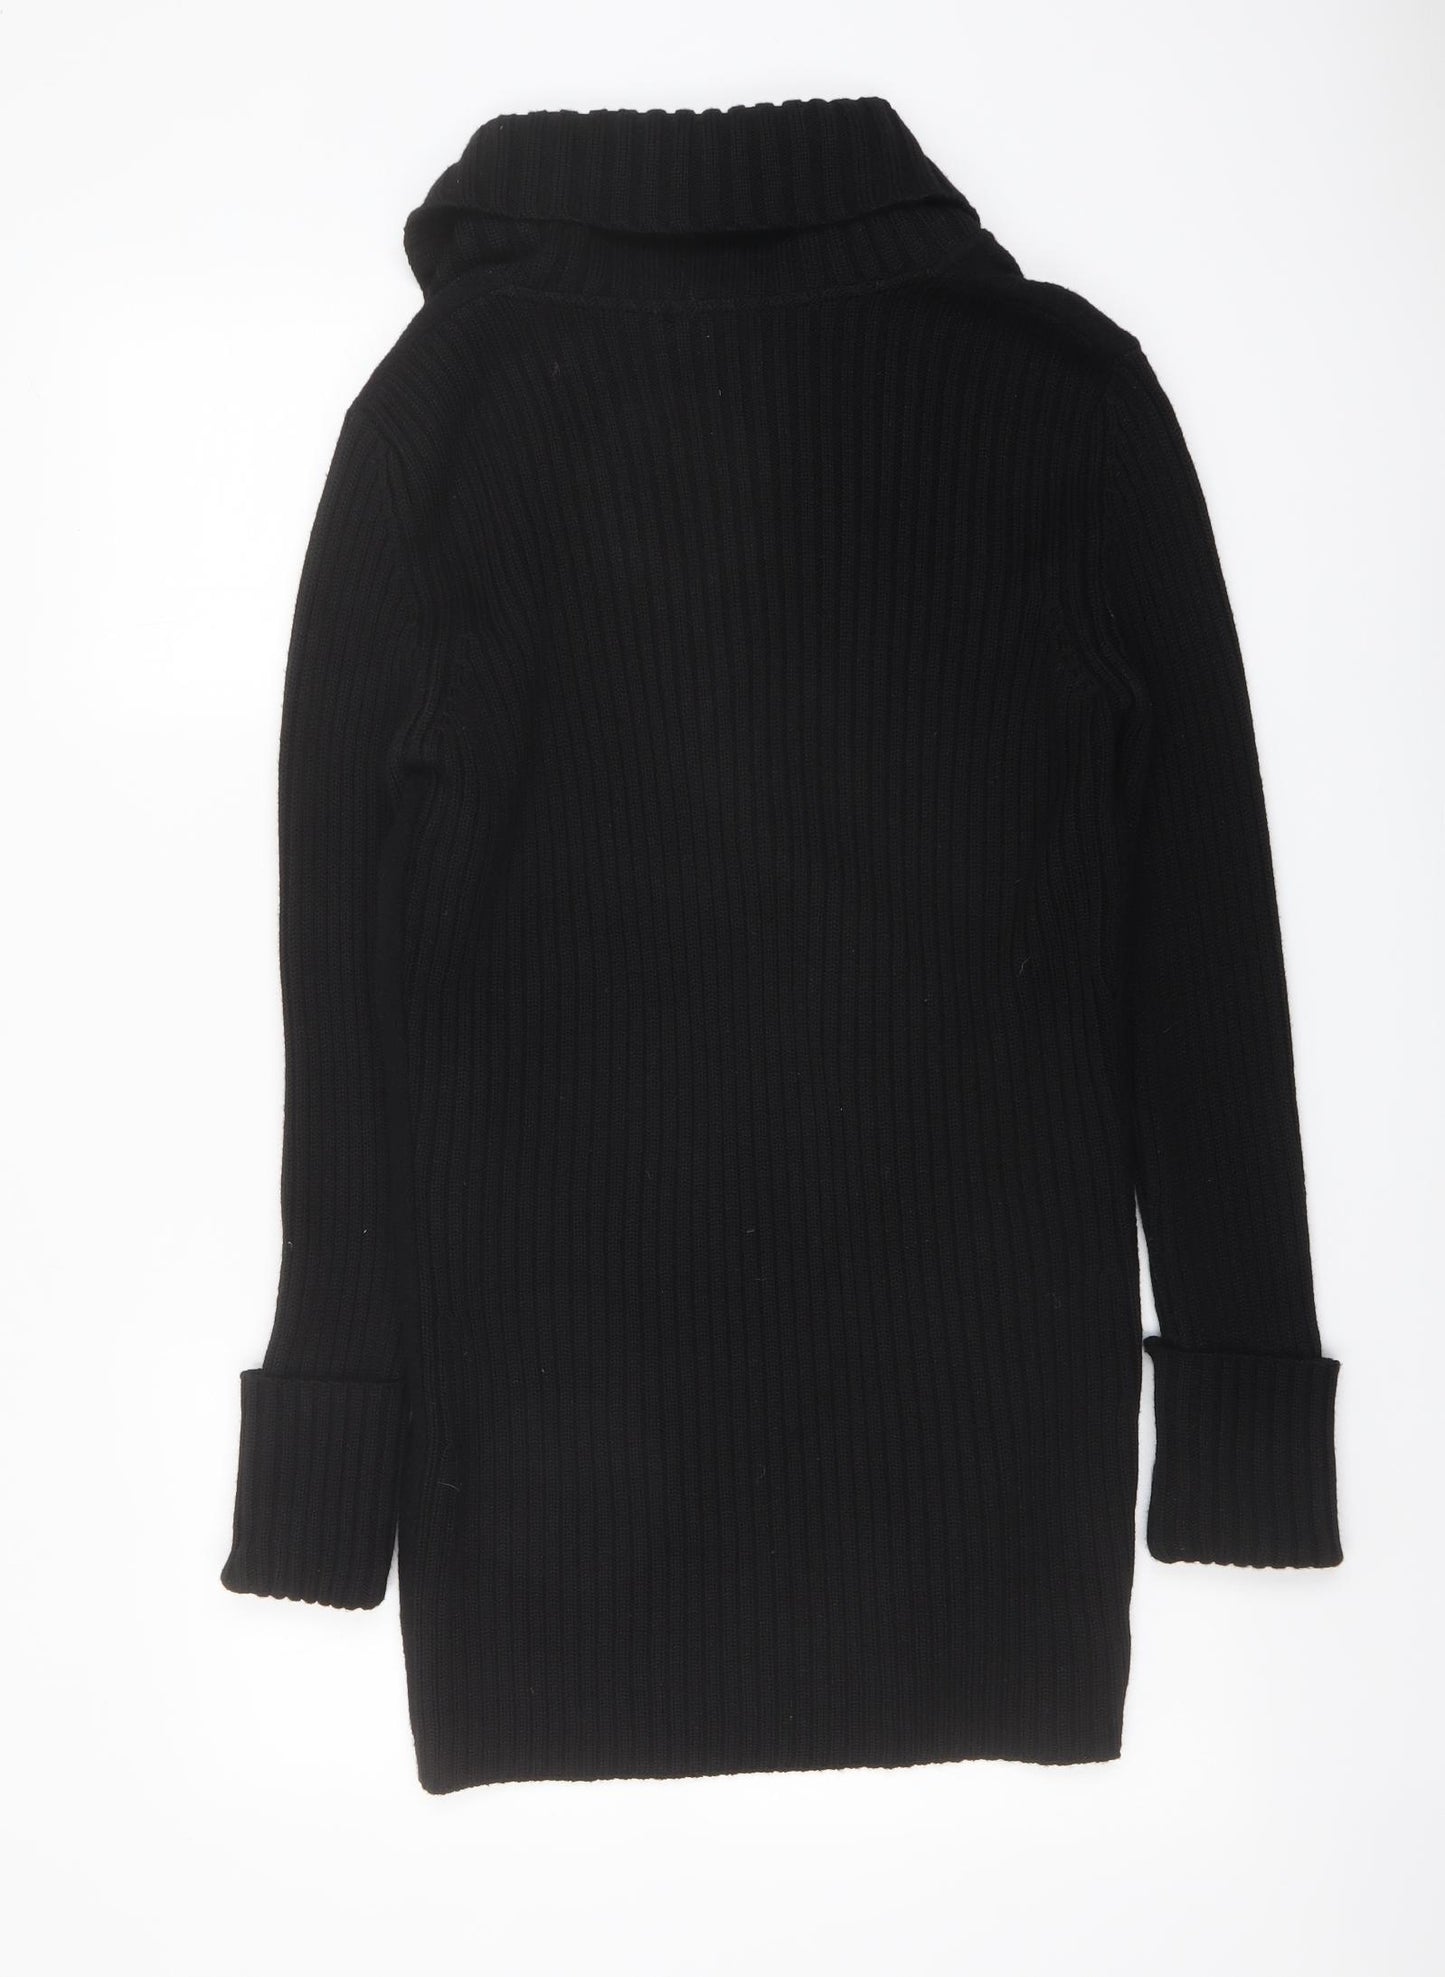 Marks and Spencer Womens Black V-Neck Wool Cardigan Jumper Size 10